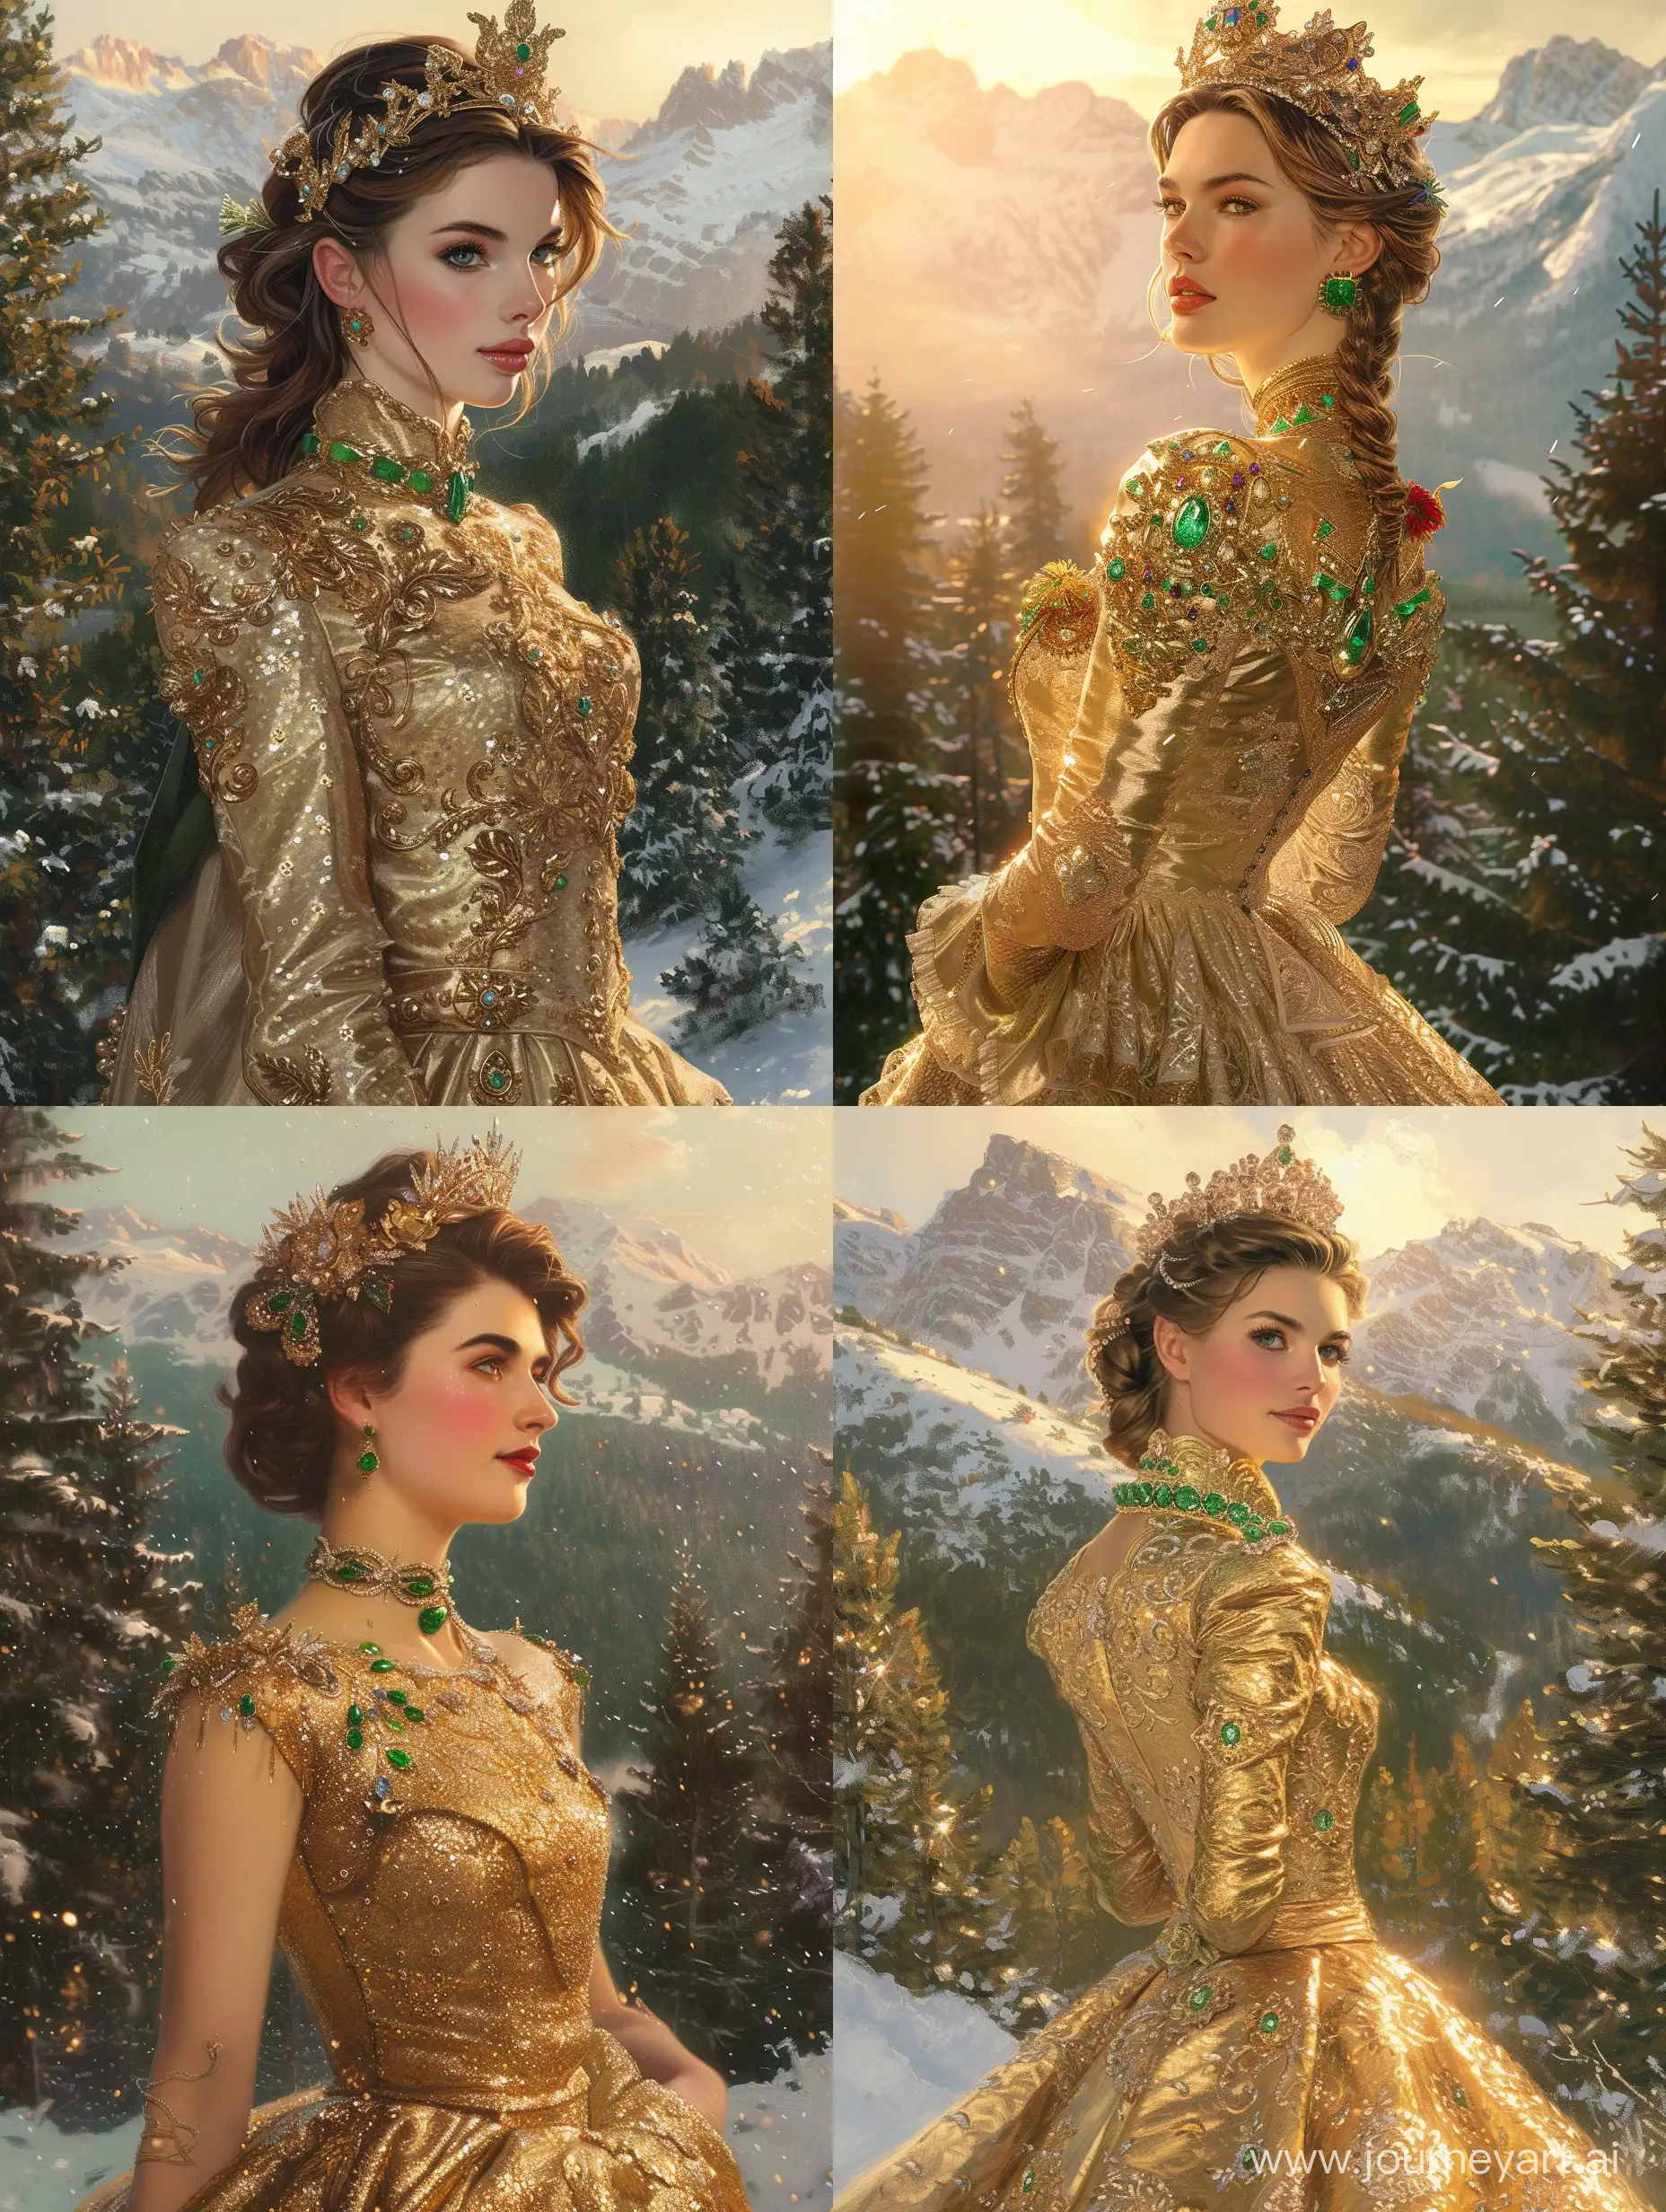 Enchanting-Woman-in-Exotic-Gold-Dress-Gazes-at-Snowy-Mountain-Kingdom